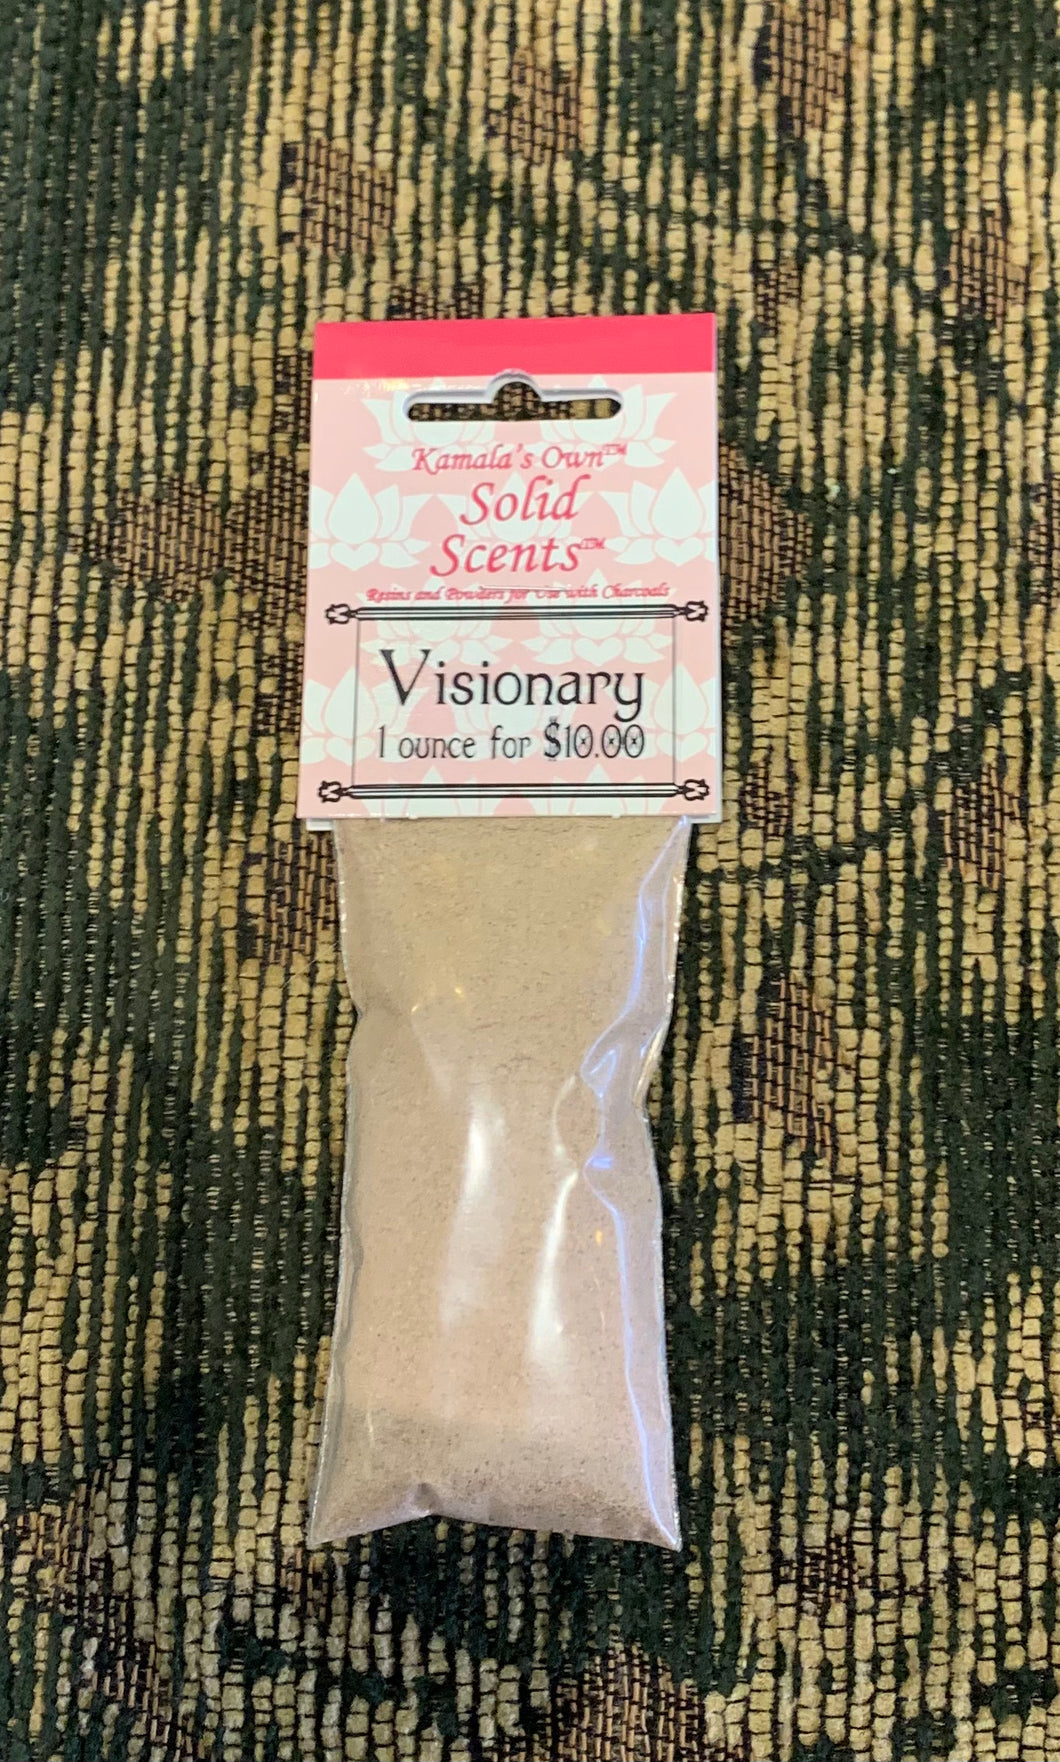 Visionary powdered incense